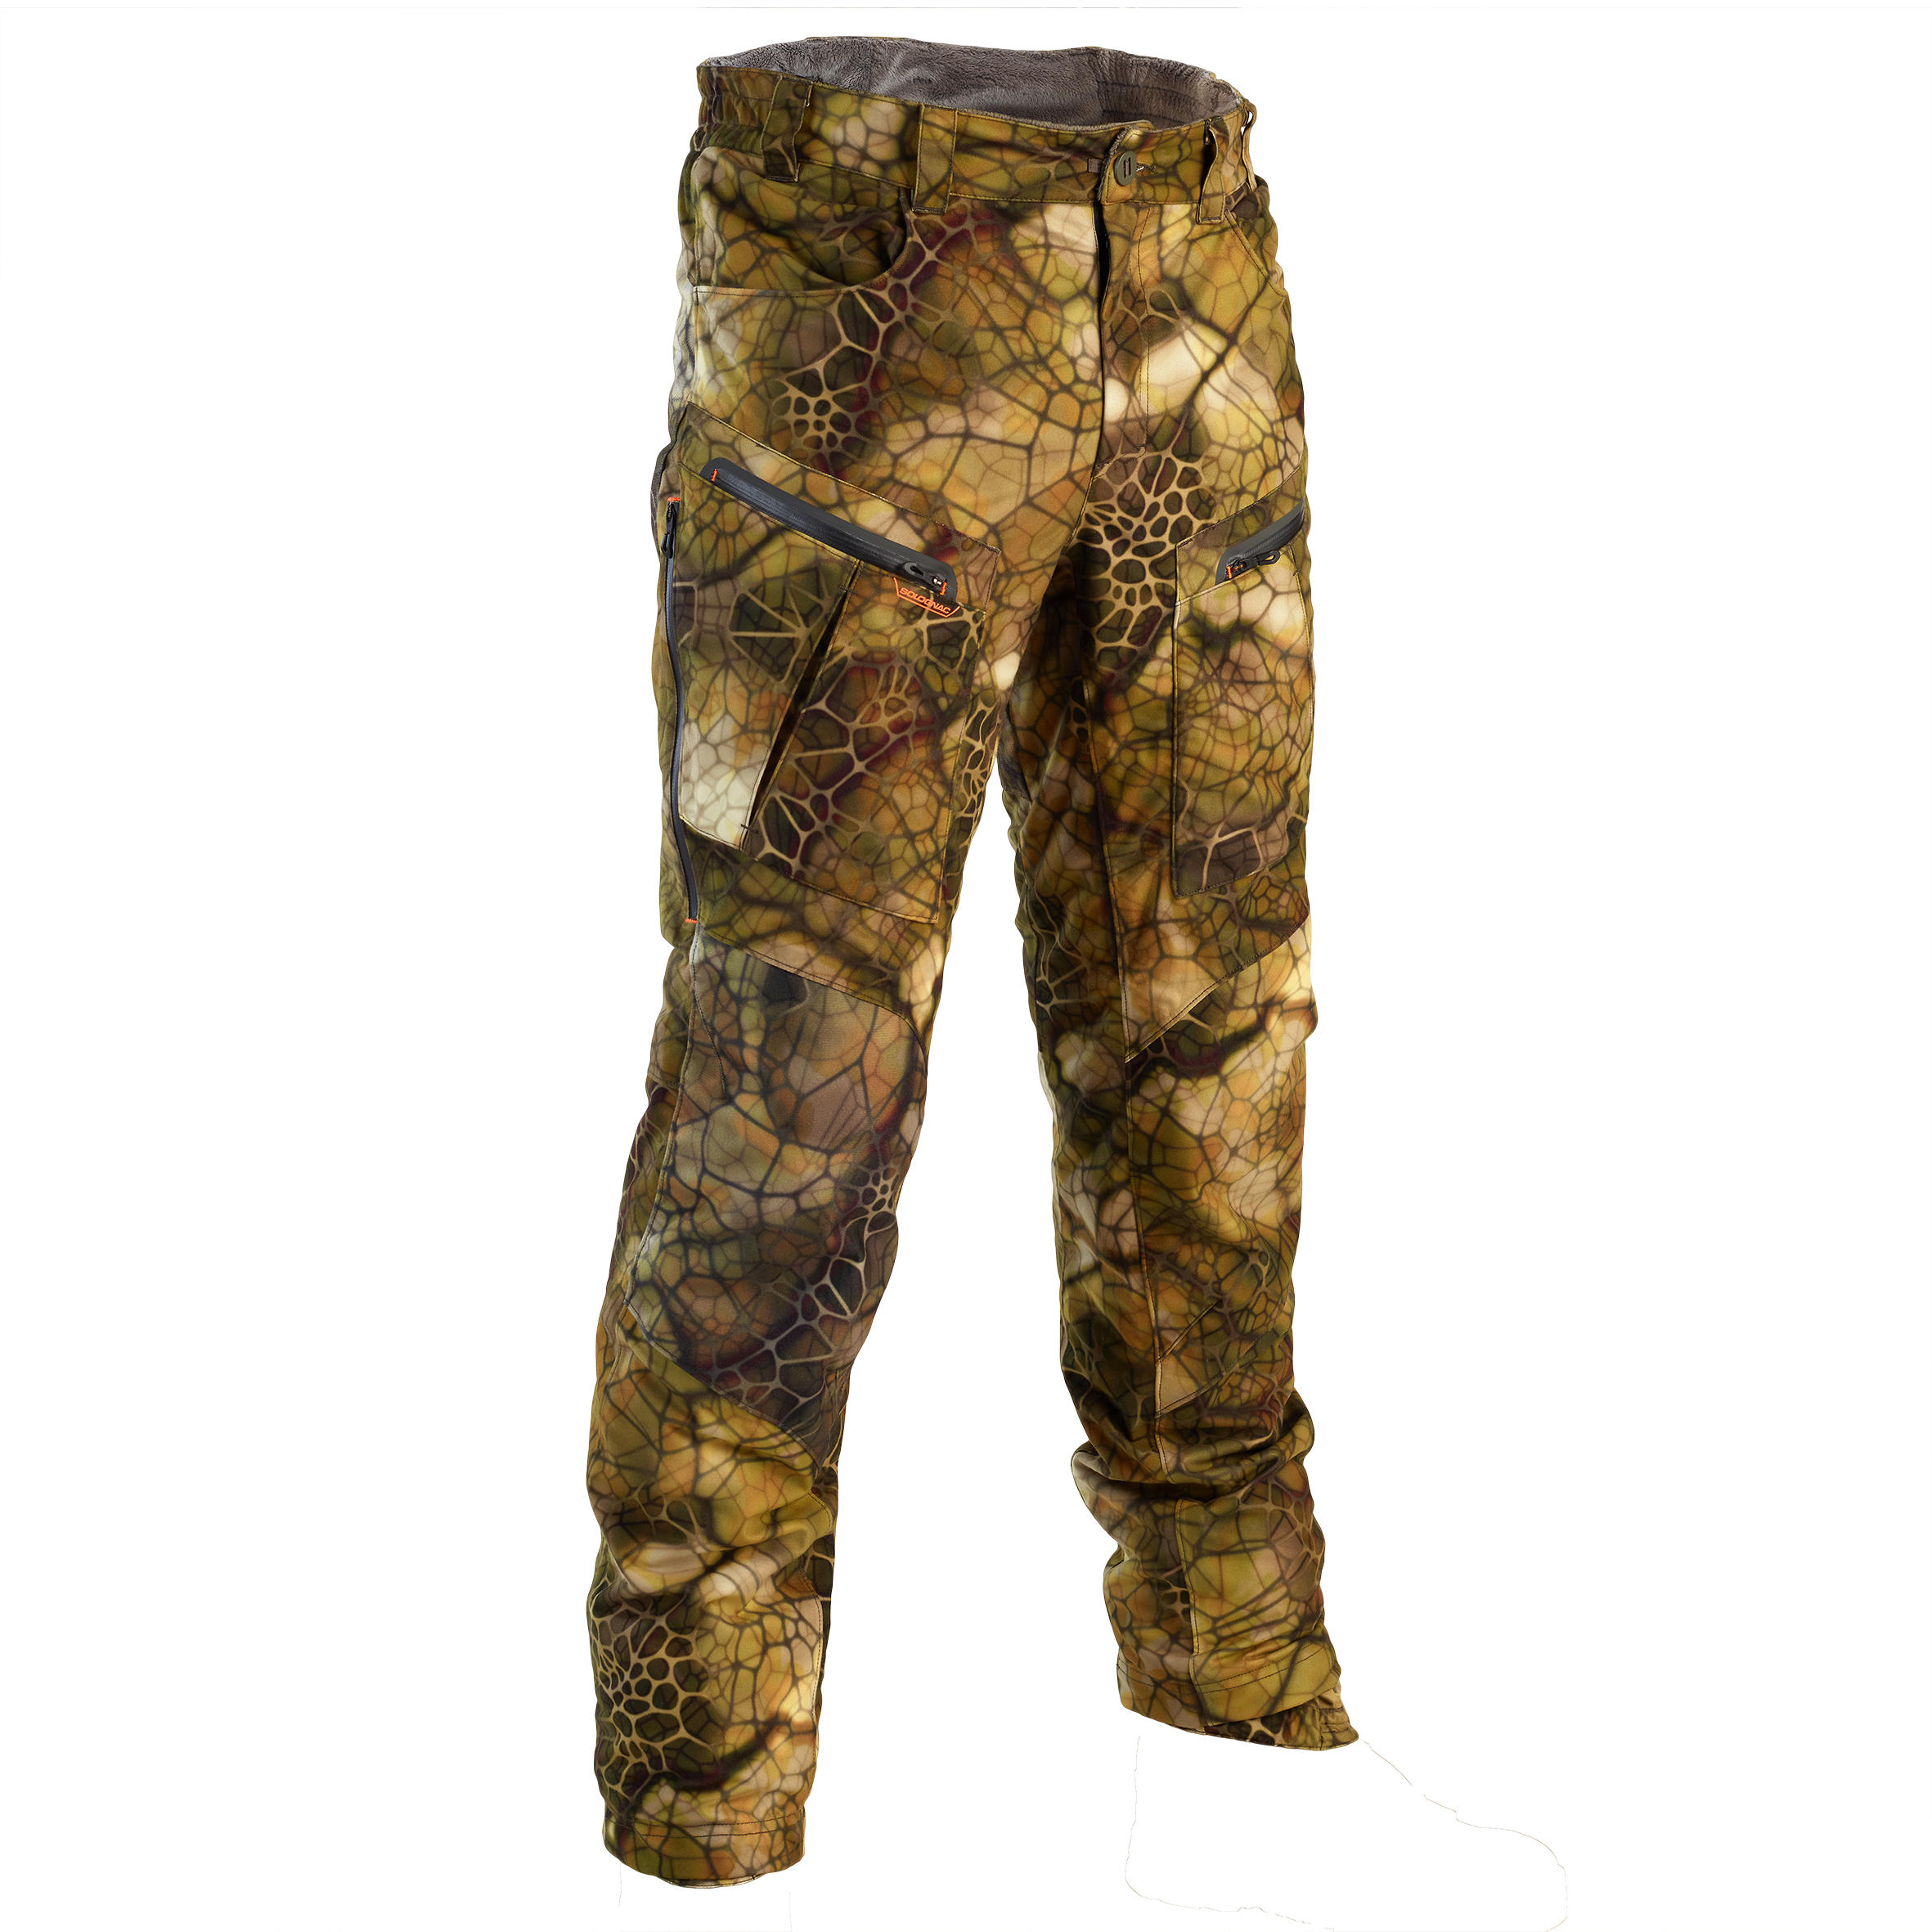 Pantalon Impermeabil Călduros 900 camuflaj Furtiv Bărbați decathlon.ro  Imbracaminte Natura